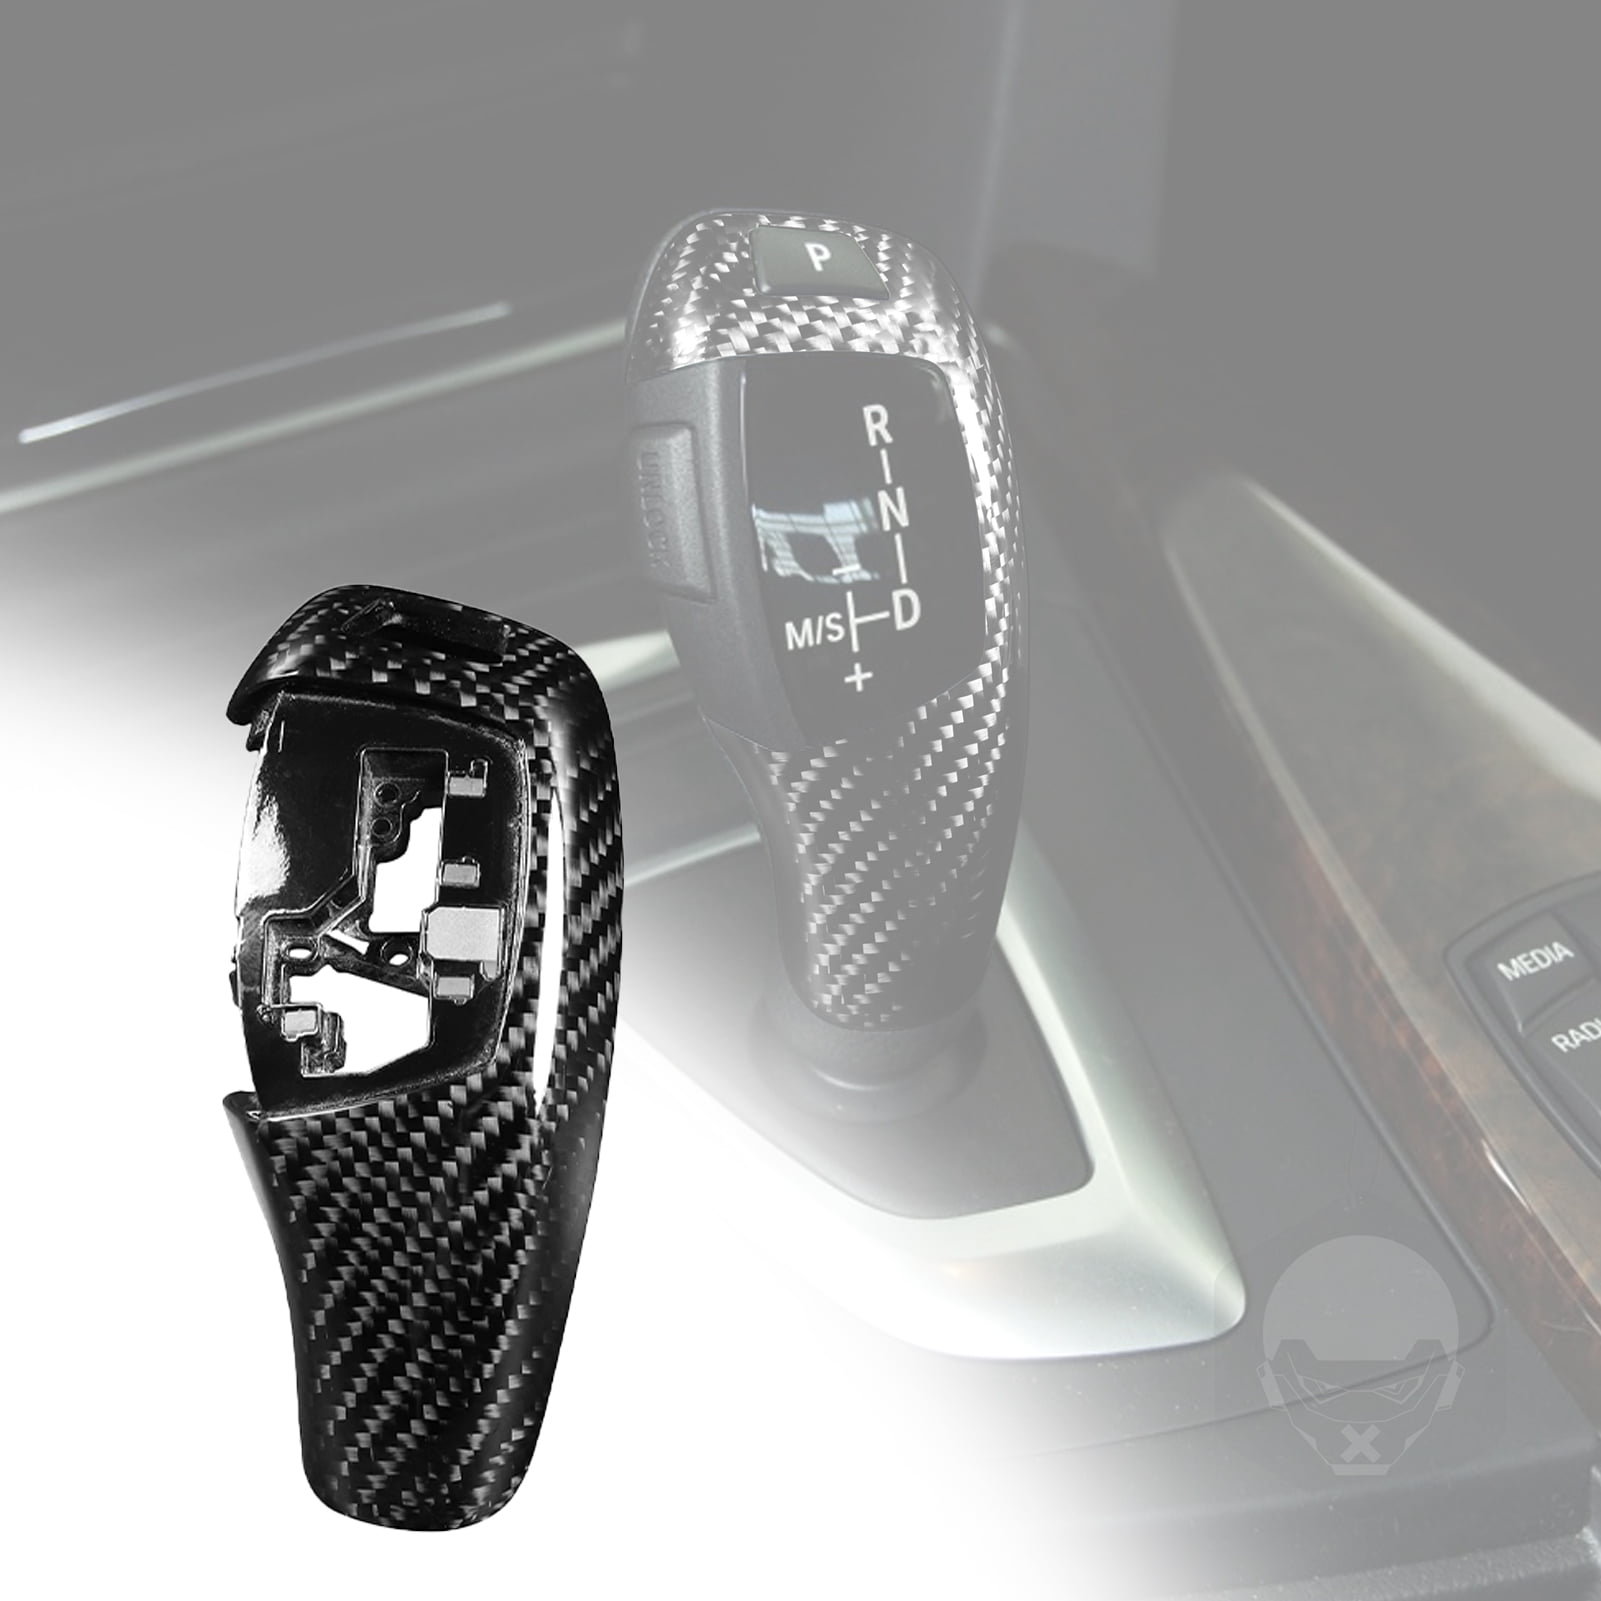 Carbon Fiber Gear Shift Base Cover Trim Sticker For BMW 5Series F10 2011-2017 